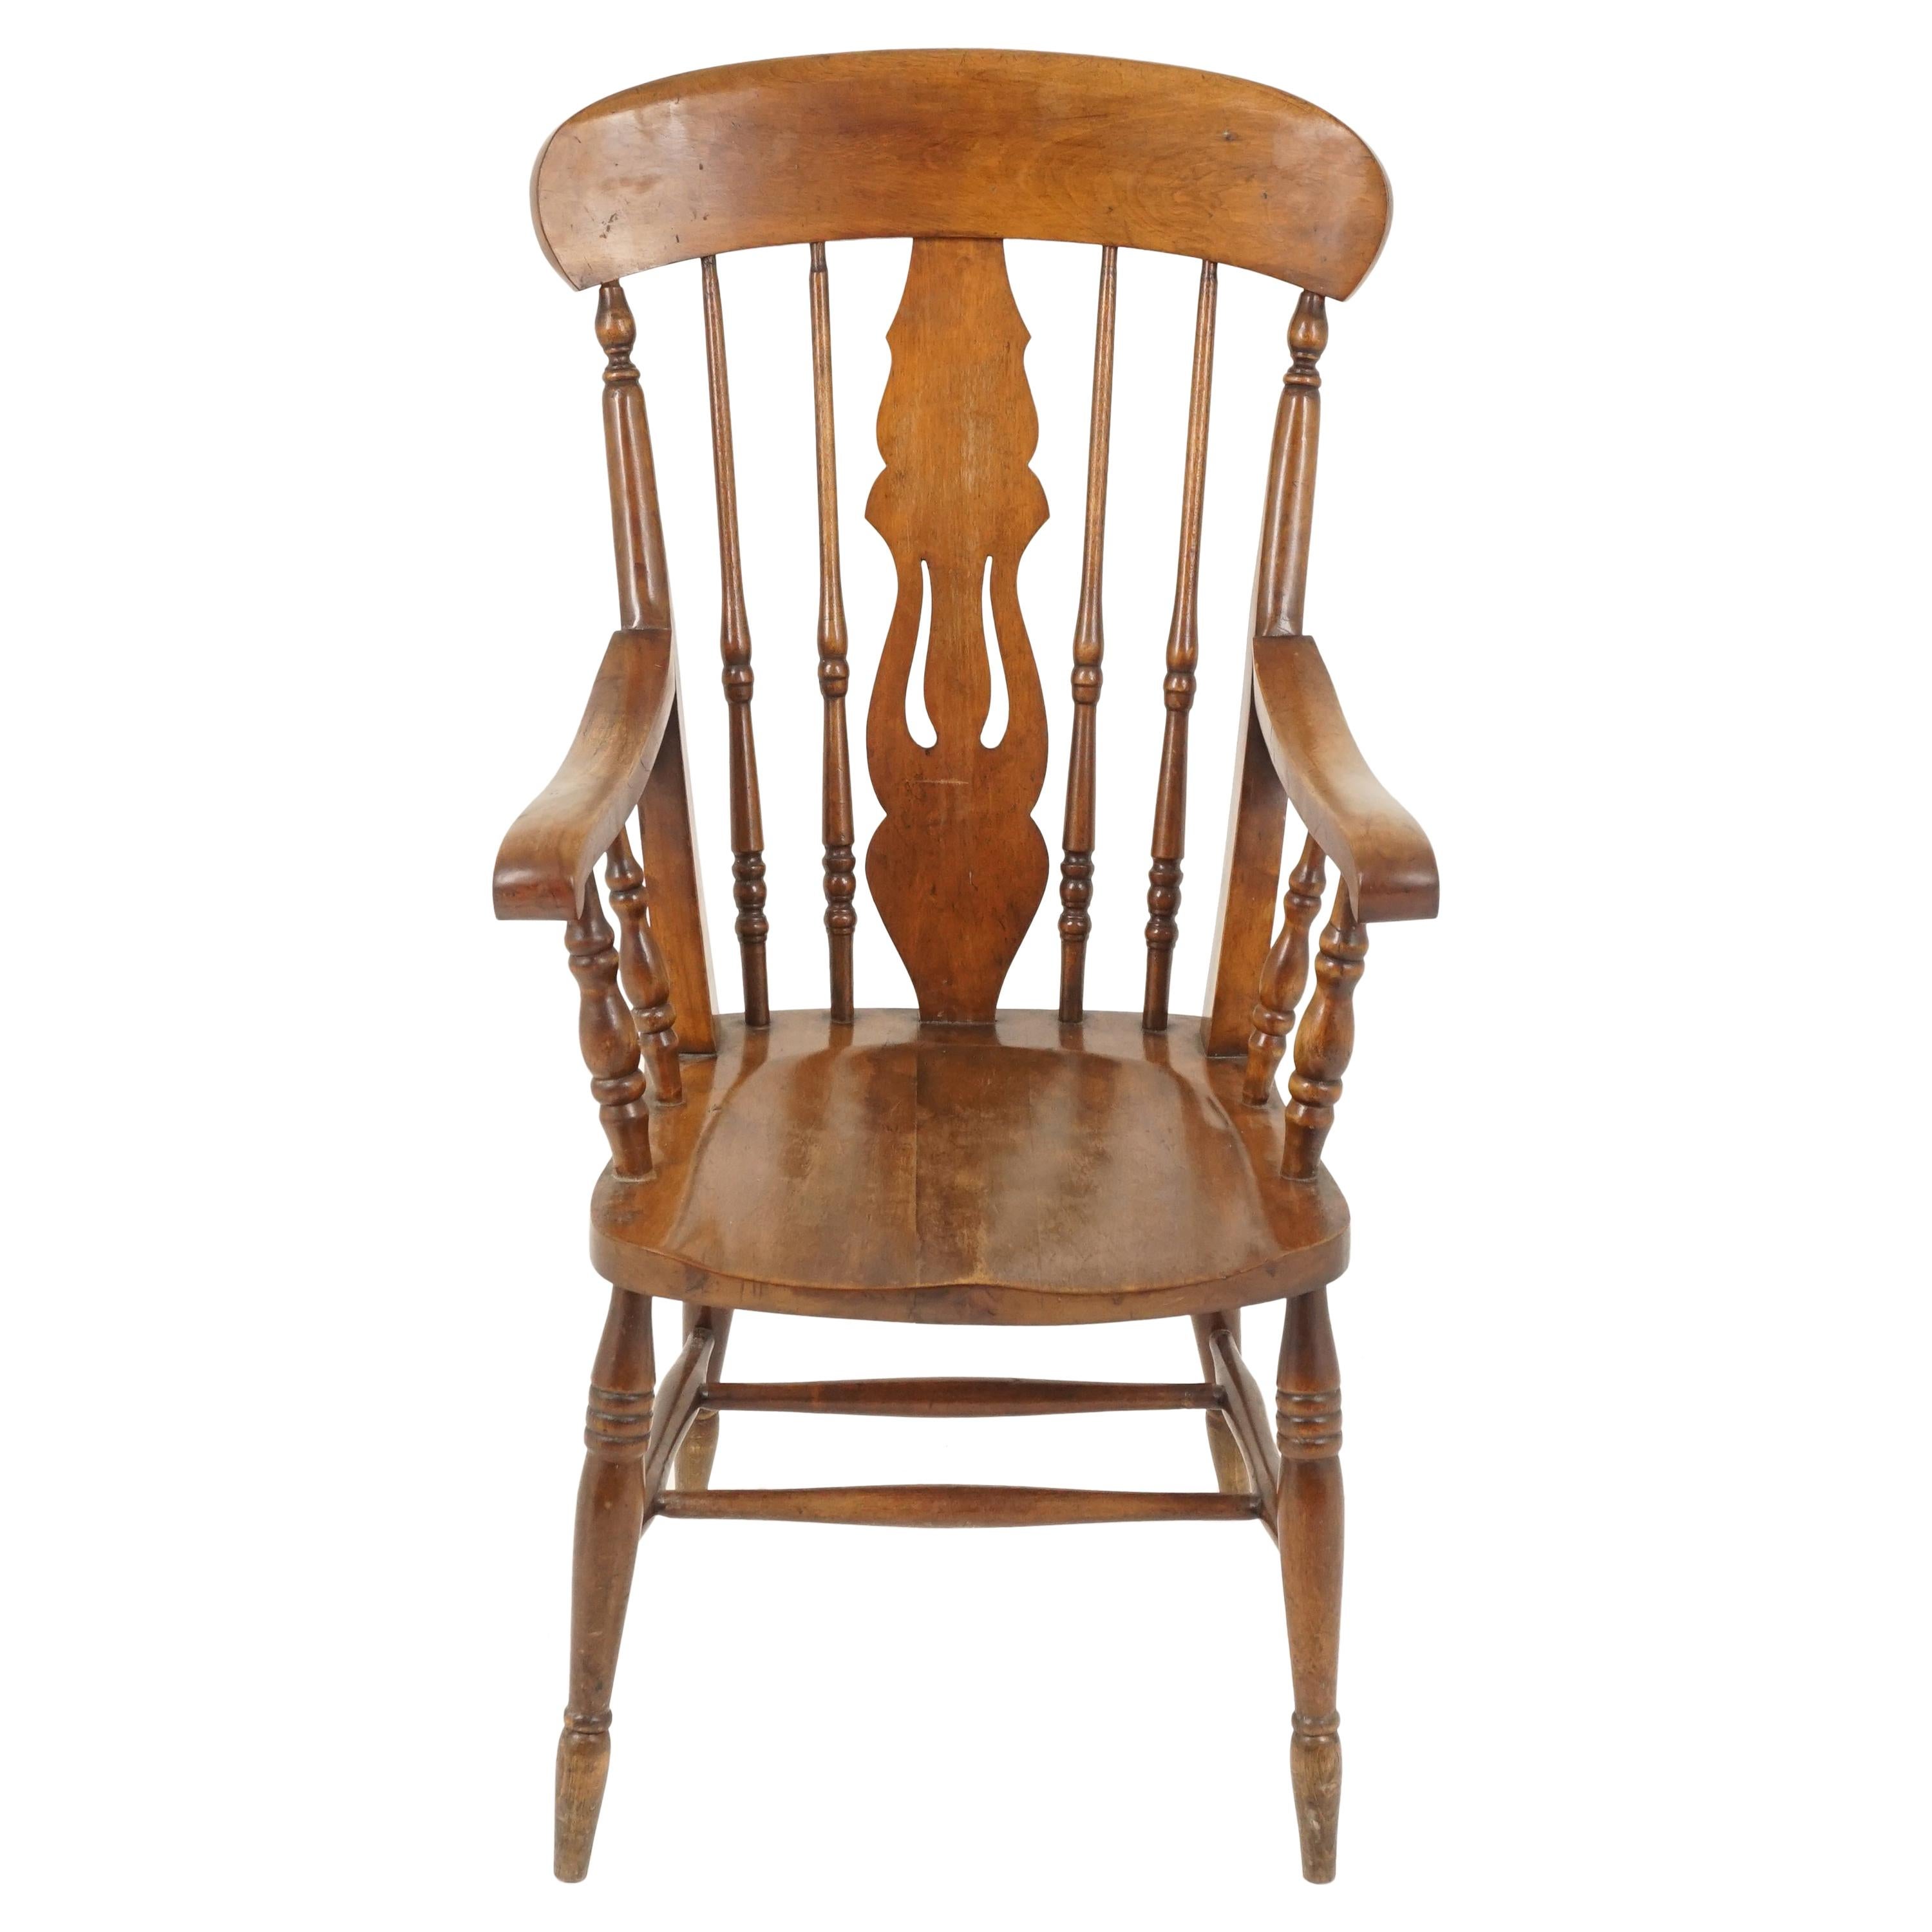 Antique Arm Chair, Windsor High Back, Country Beech Chair, Scotland 1880, B2366